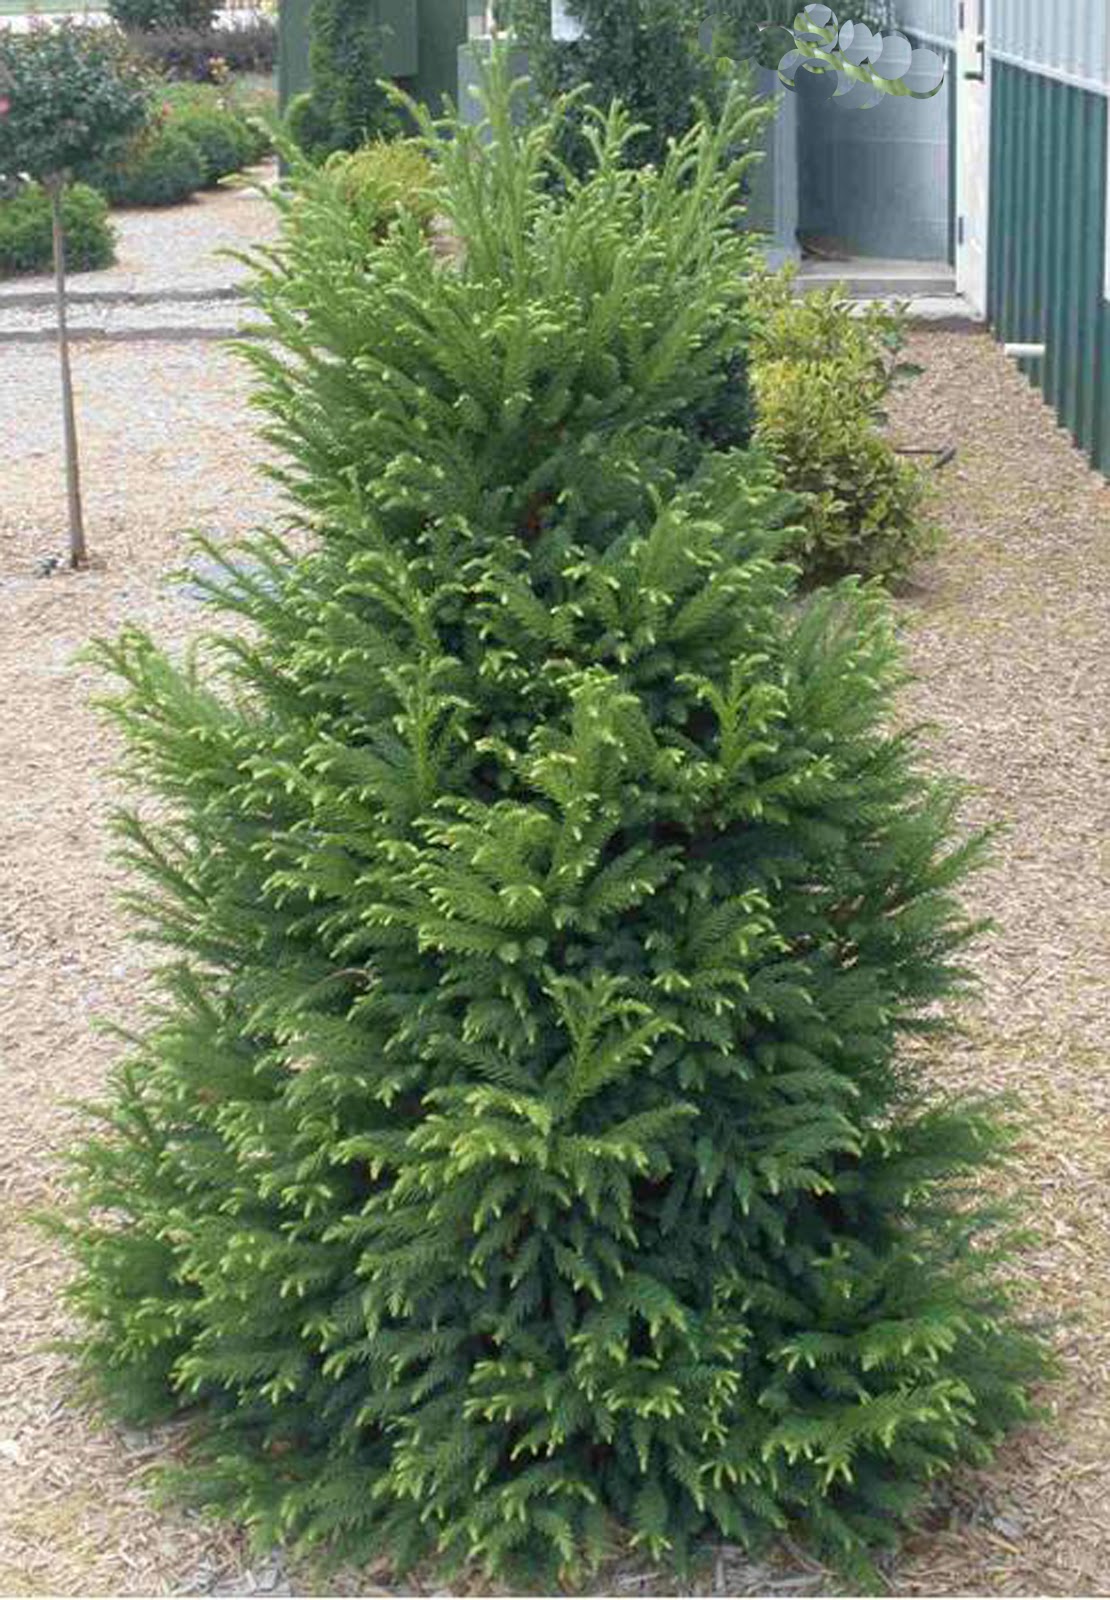 dwarf cryptomeria evergreen trees zone landscaping shrubs pyramidal provides year tree interest round conifer garden landscape